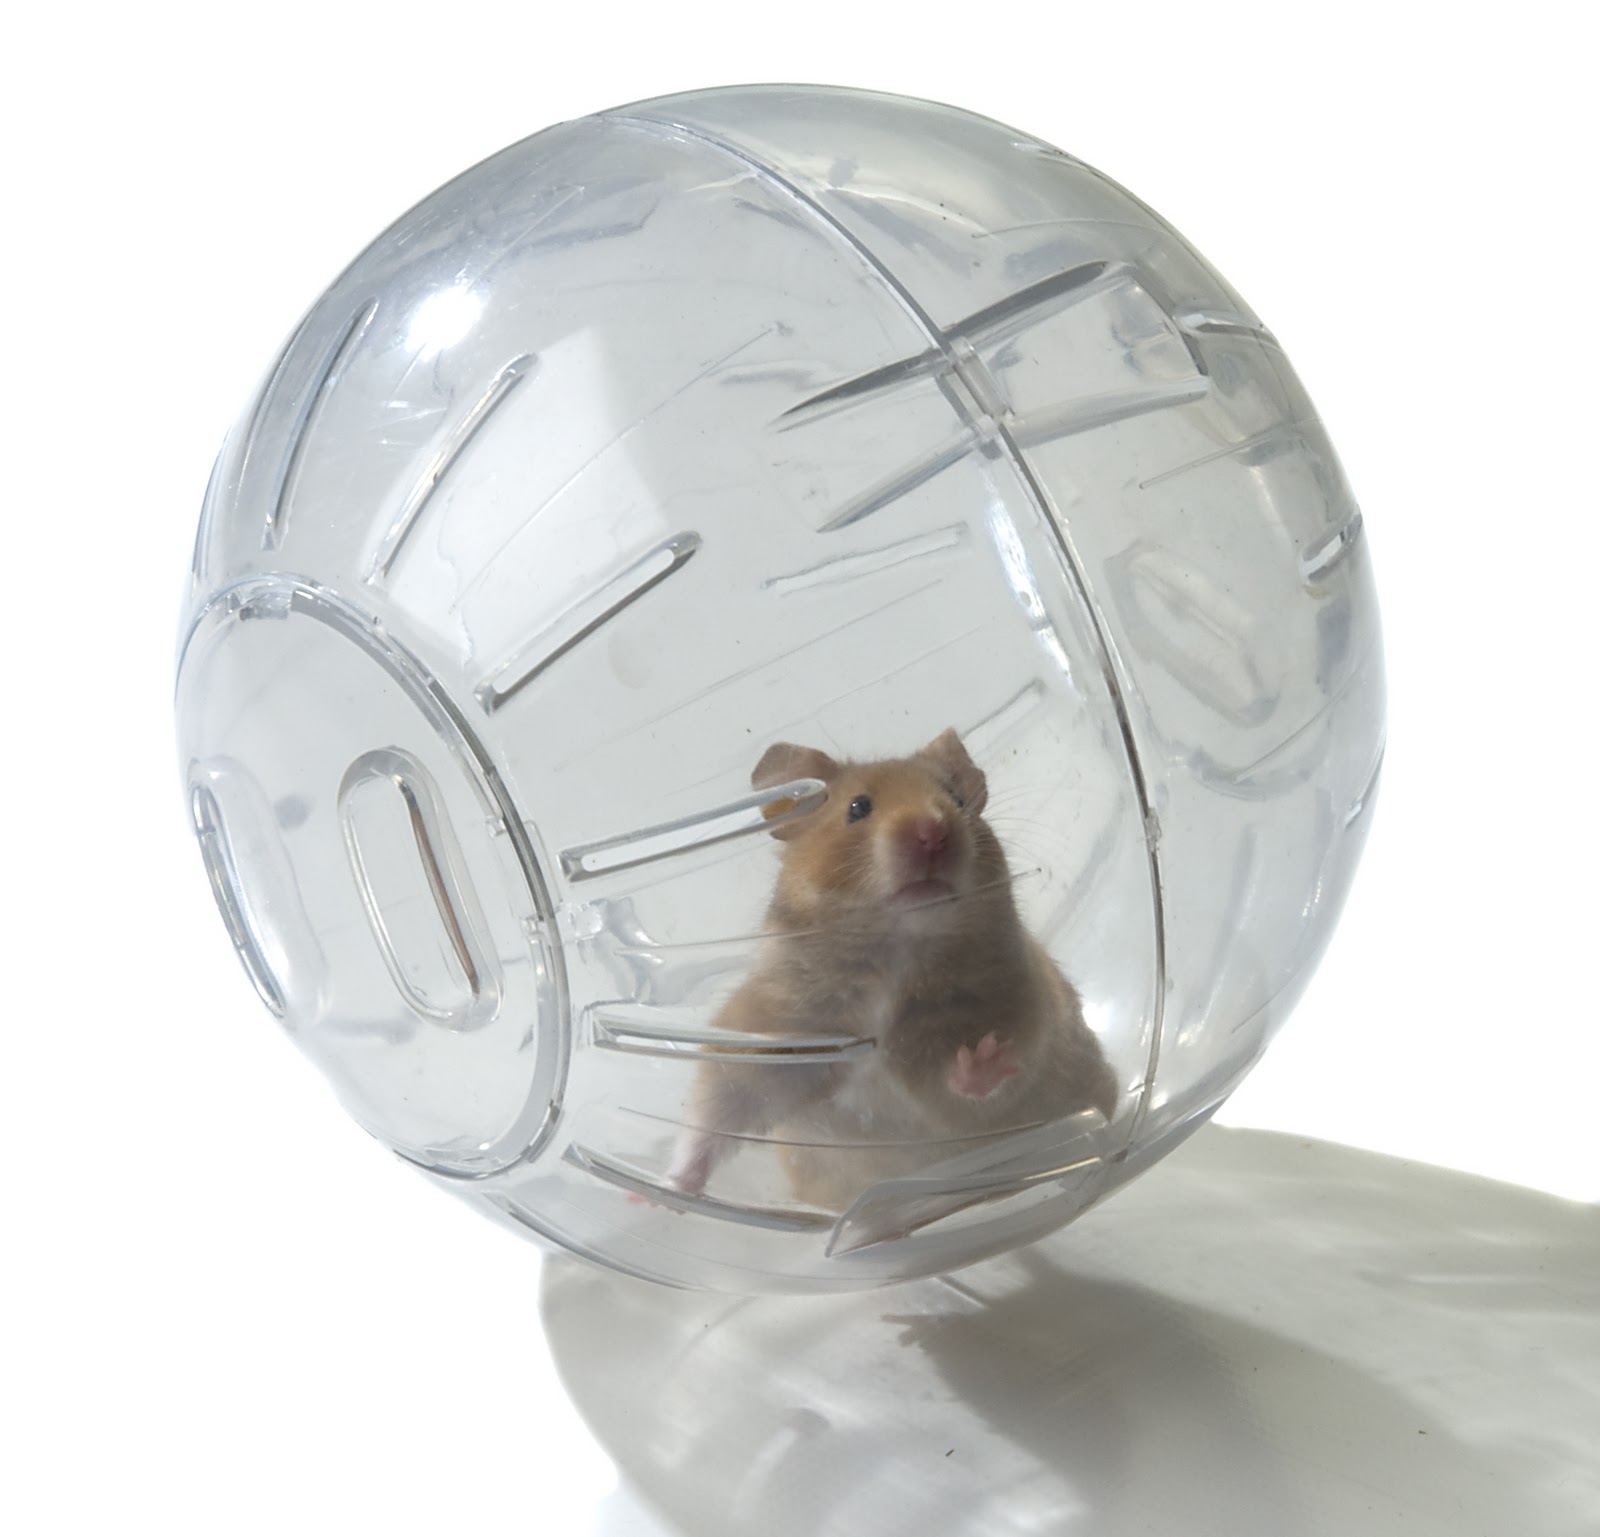 zorb-death-zorbing-hamster-ball